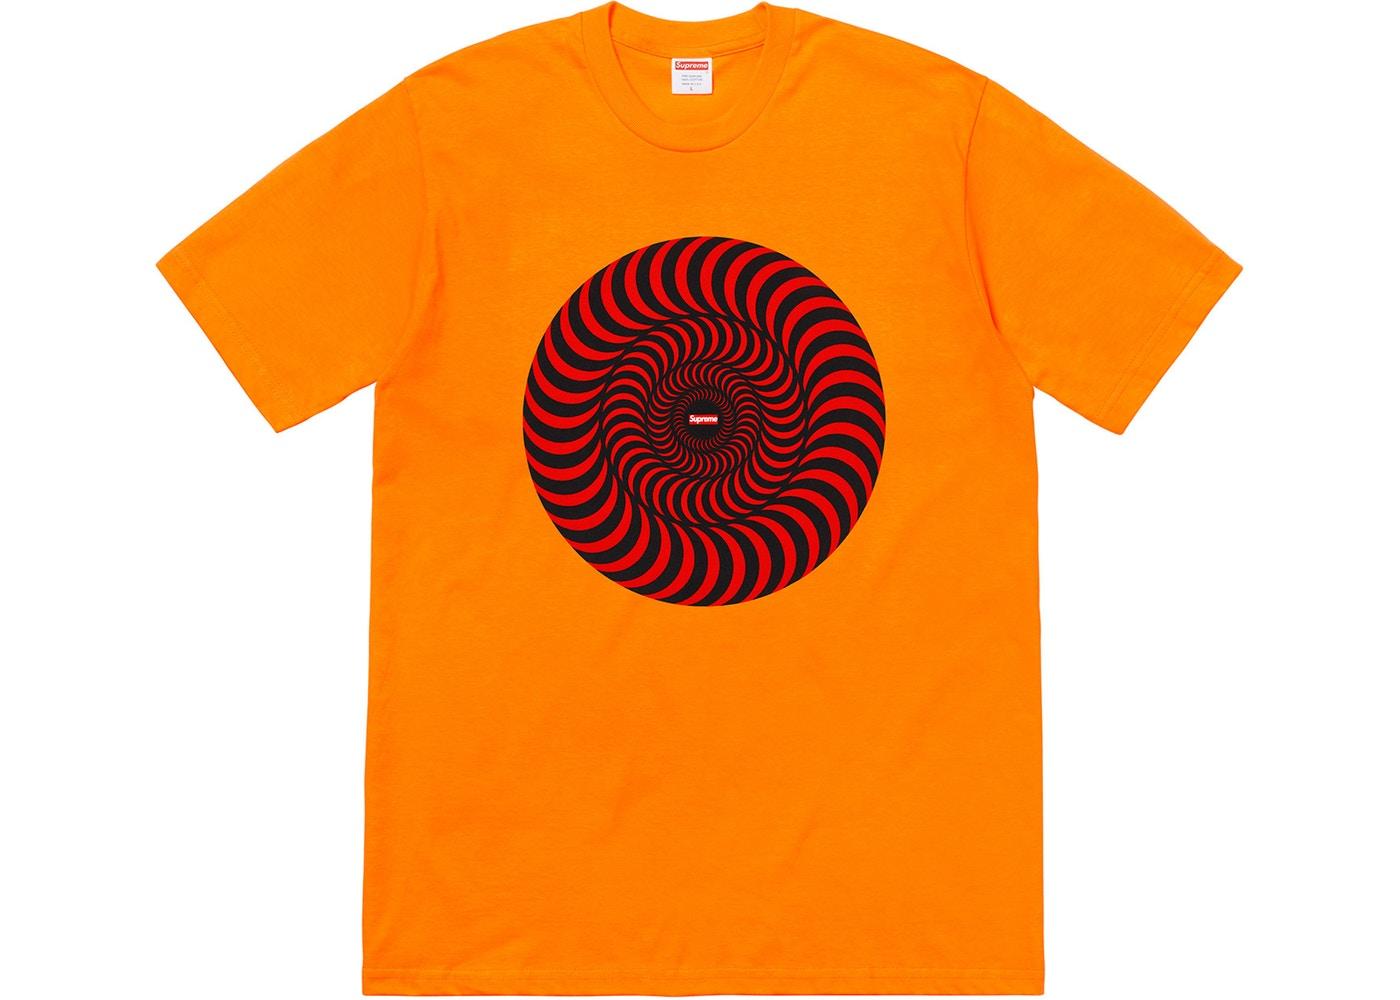 Supreme Spitfire Classic Swirl T-Shirt Bright Orange - StockX News